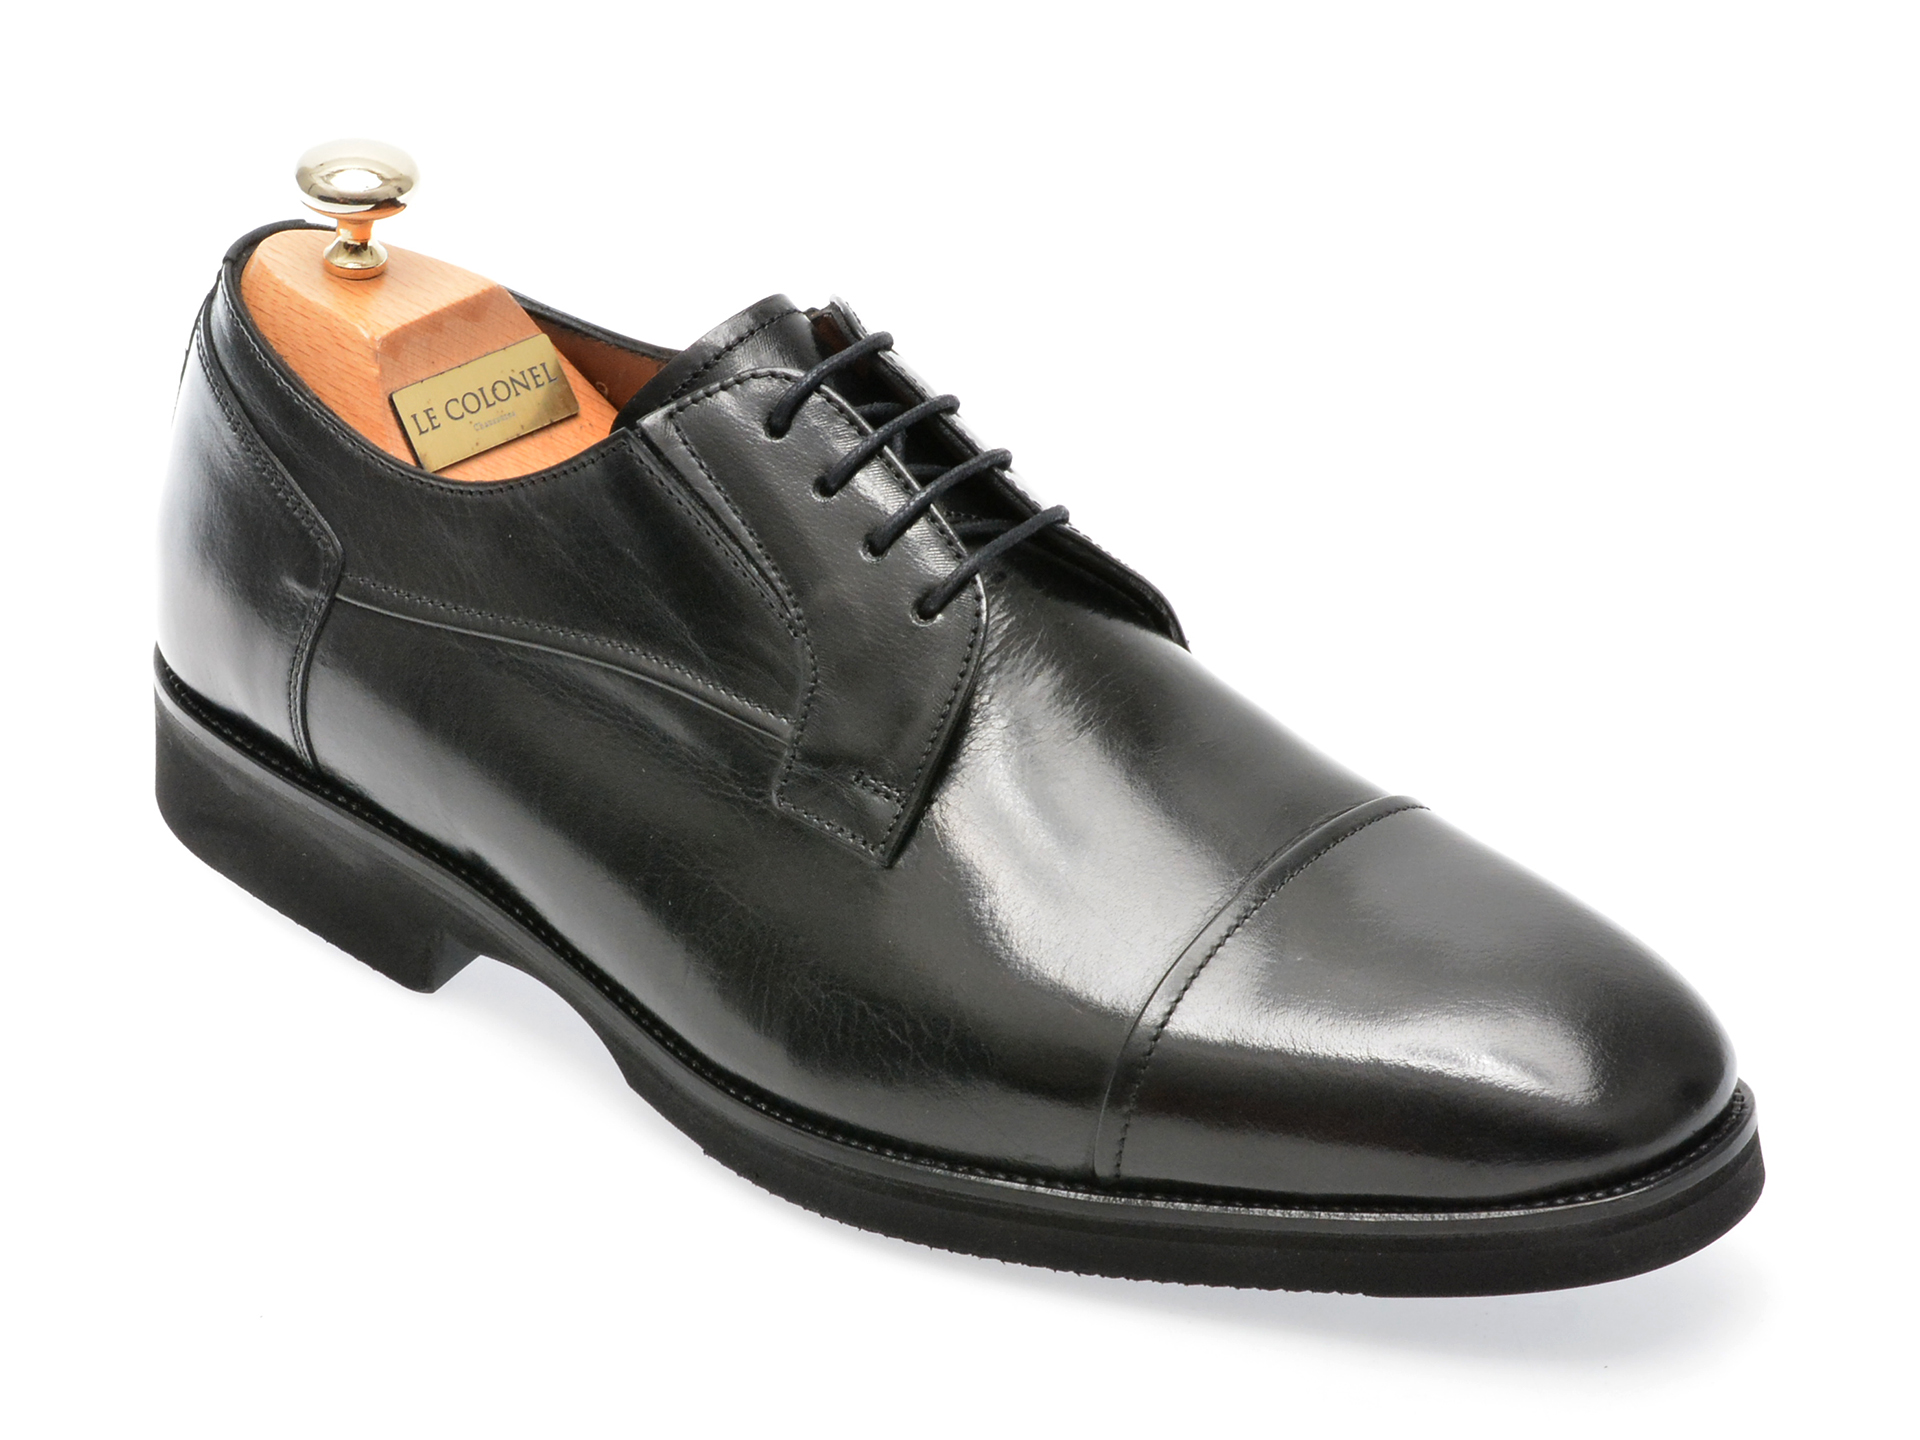 Pantofi LE COLONEL negri, 48409, din piele naturala